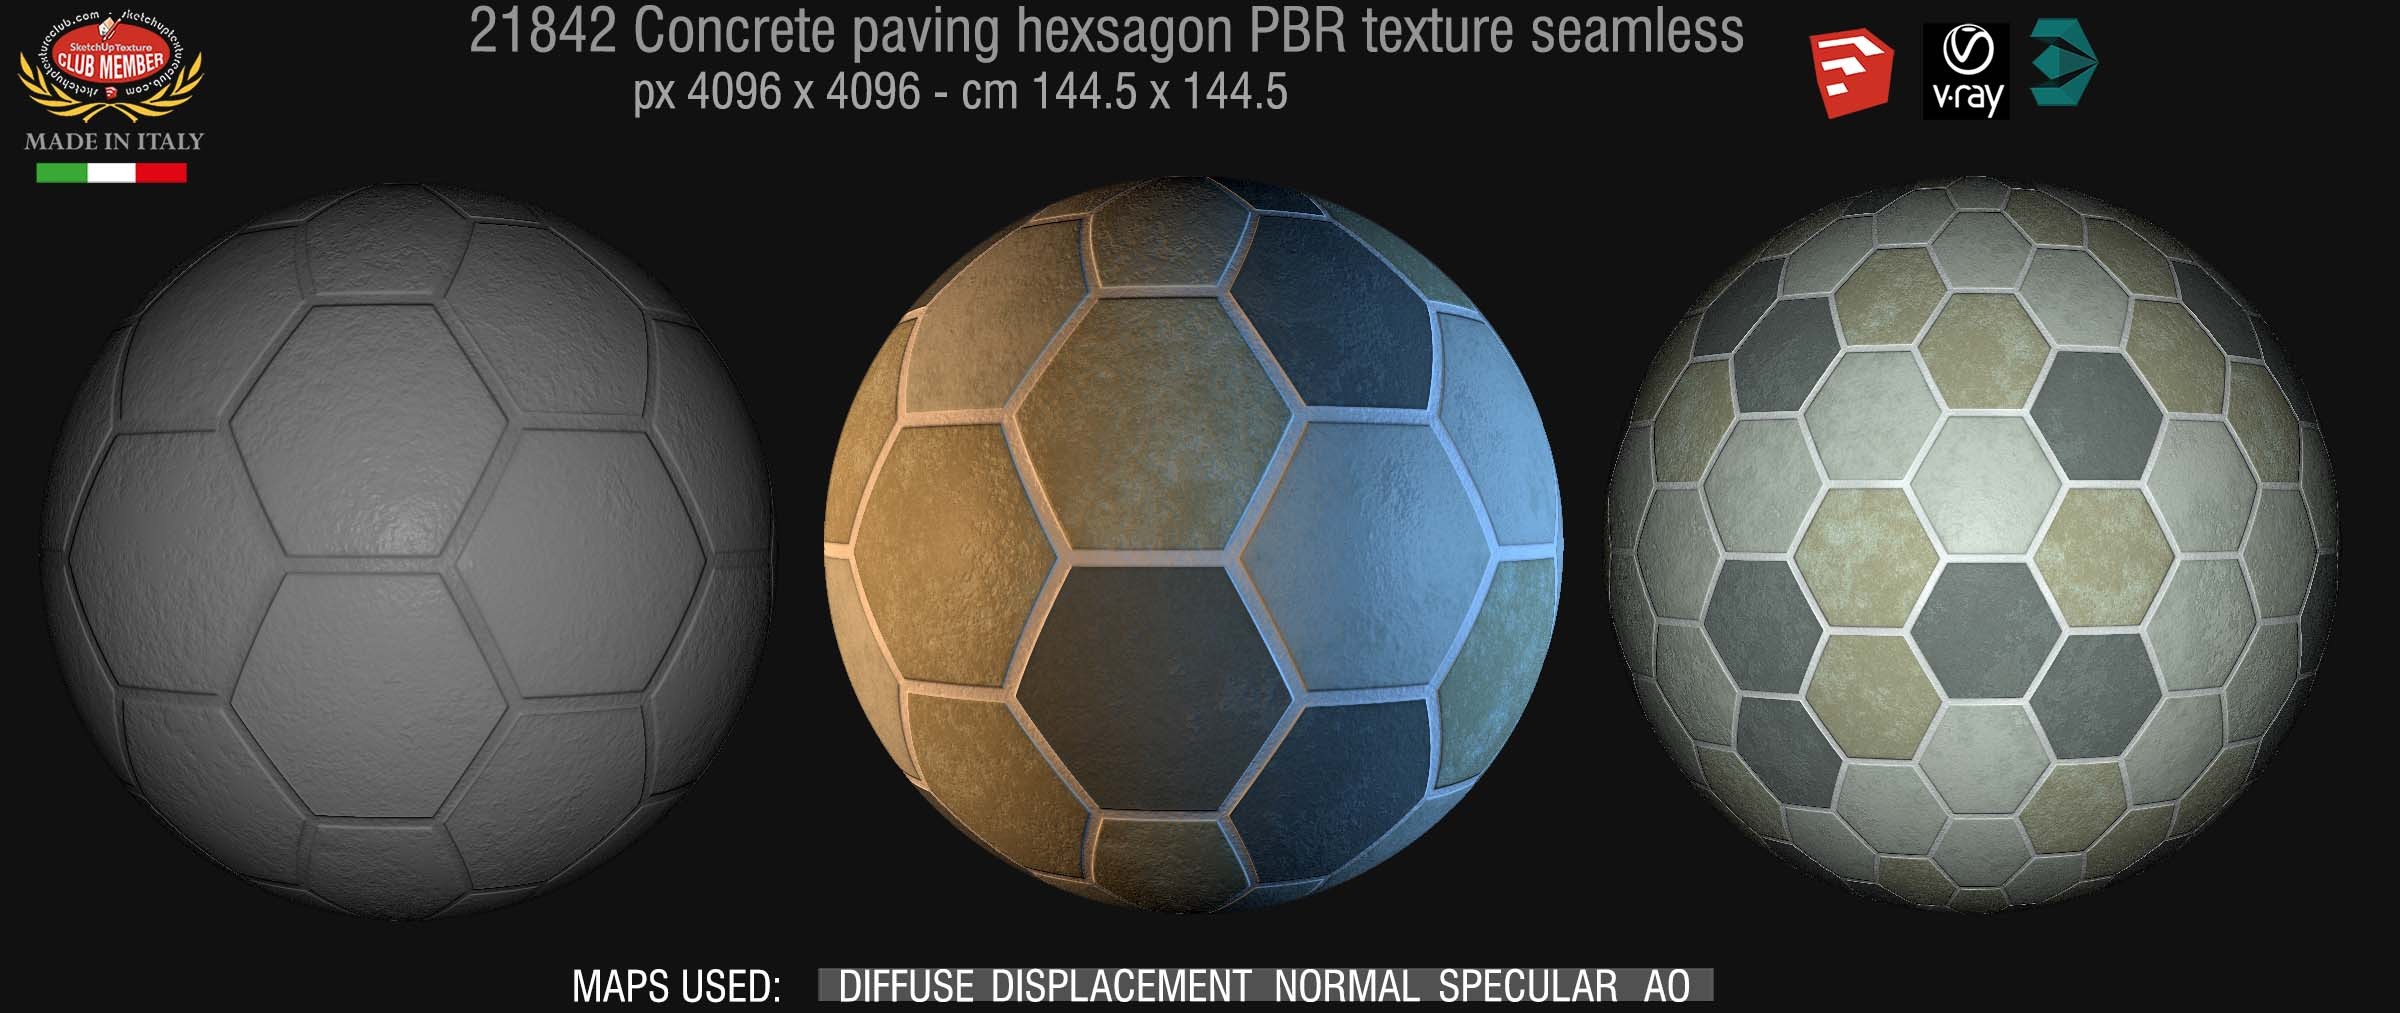 Concrete paving hexagon PBR texture seamless 21842